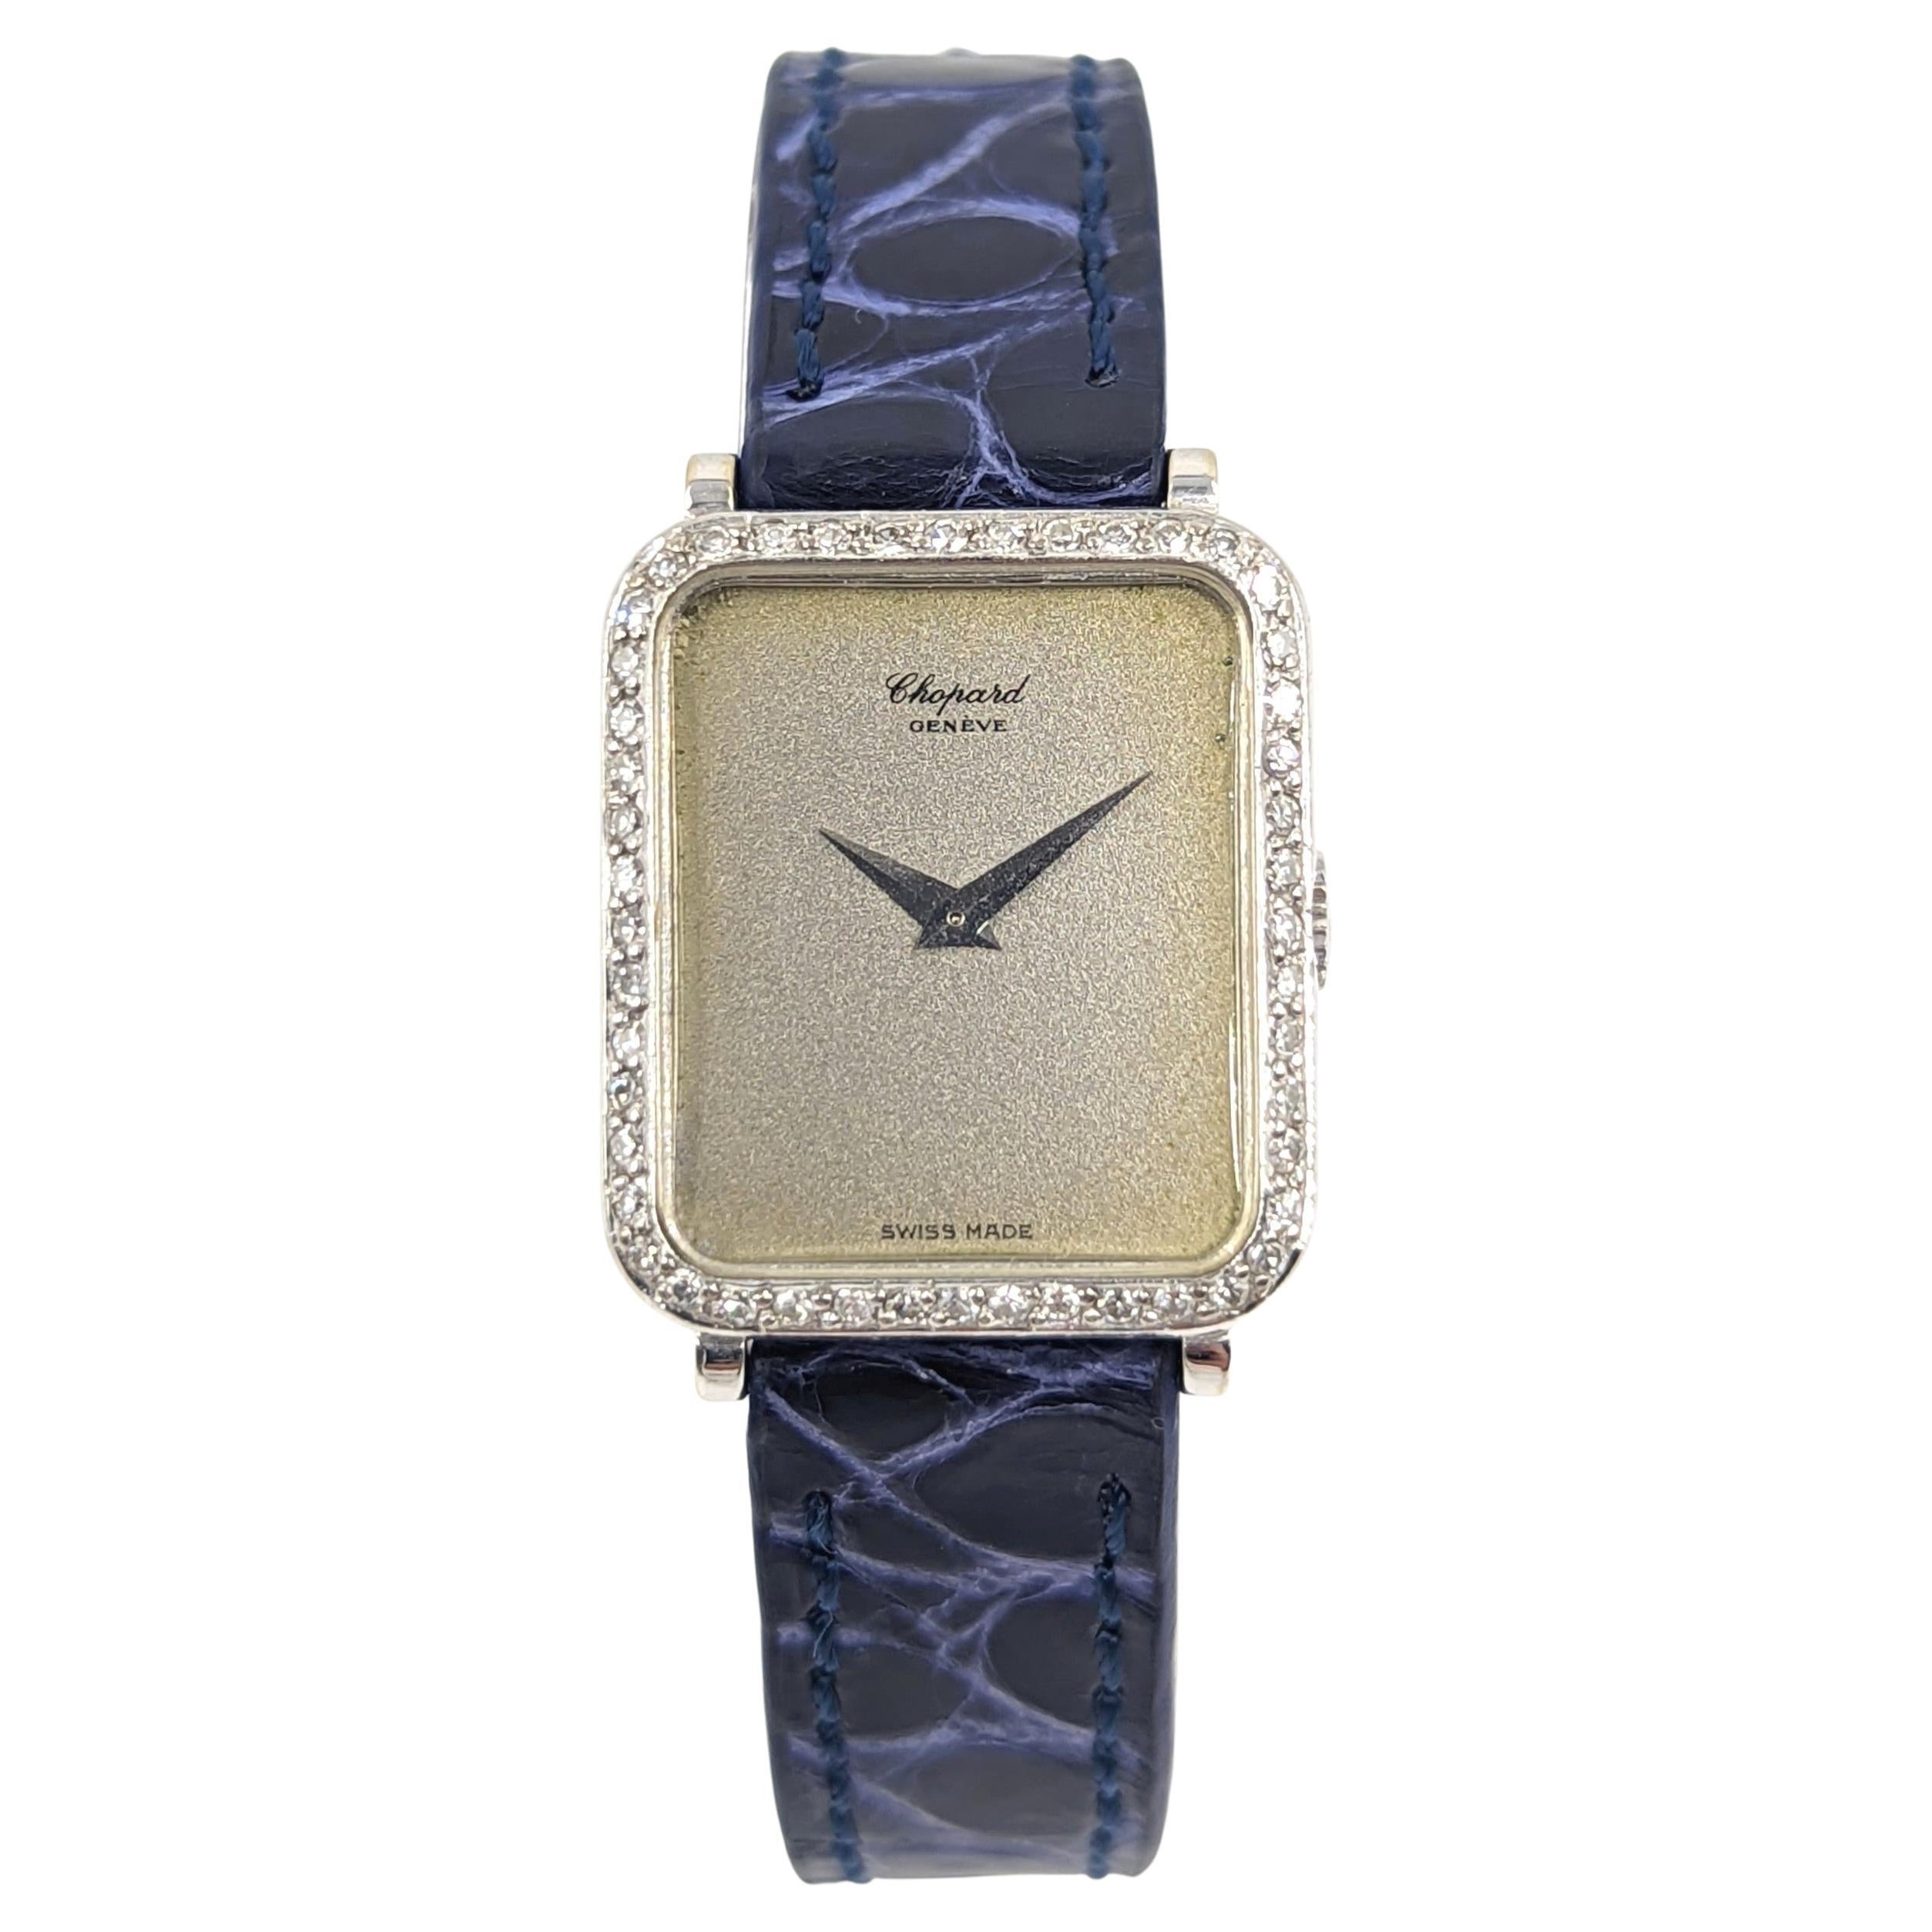 Ladies Chopard 18k White Gold Diamond Watch Rare JLC Deployment Clasp ref 8/6495 For Sale